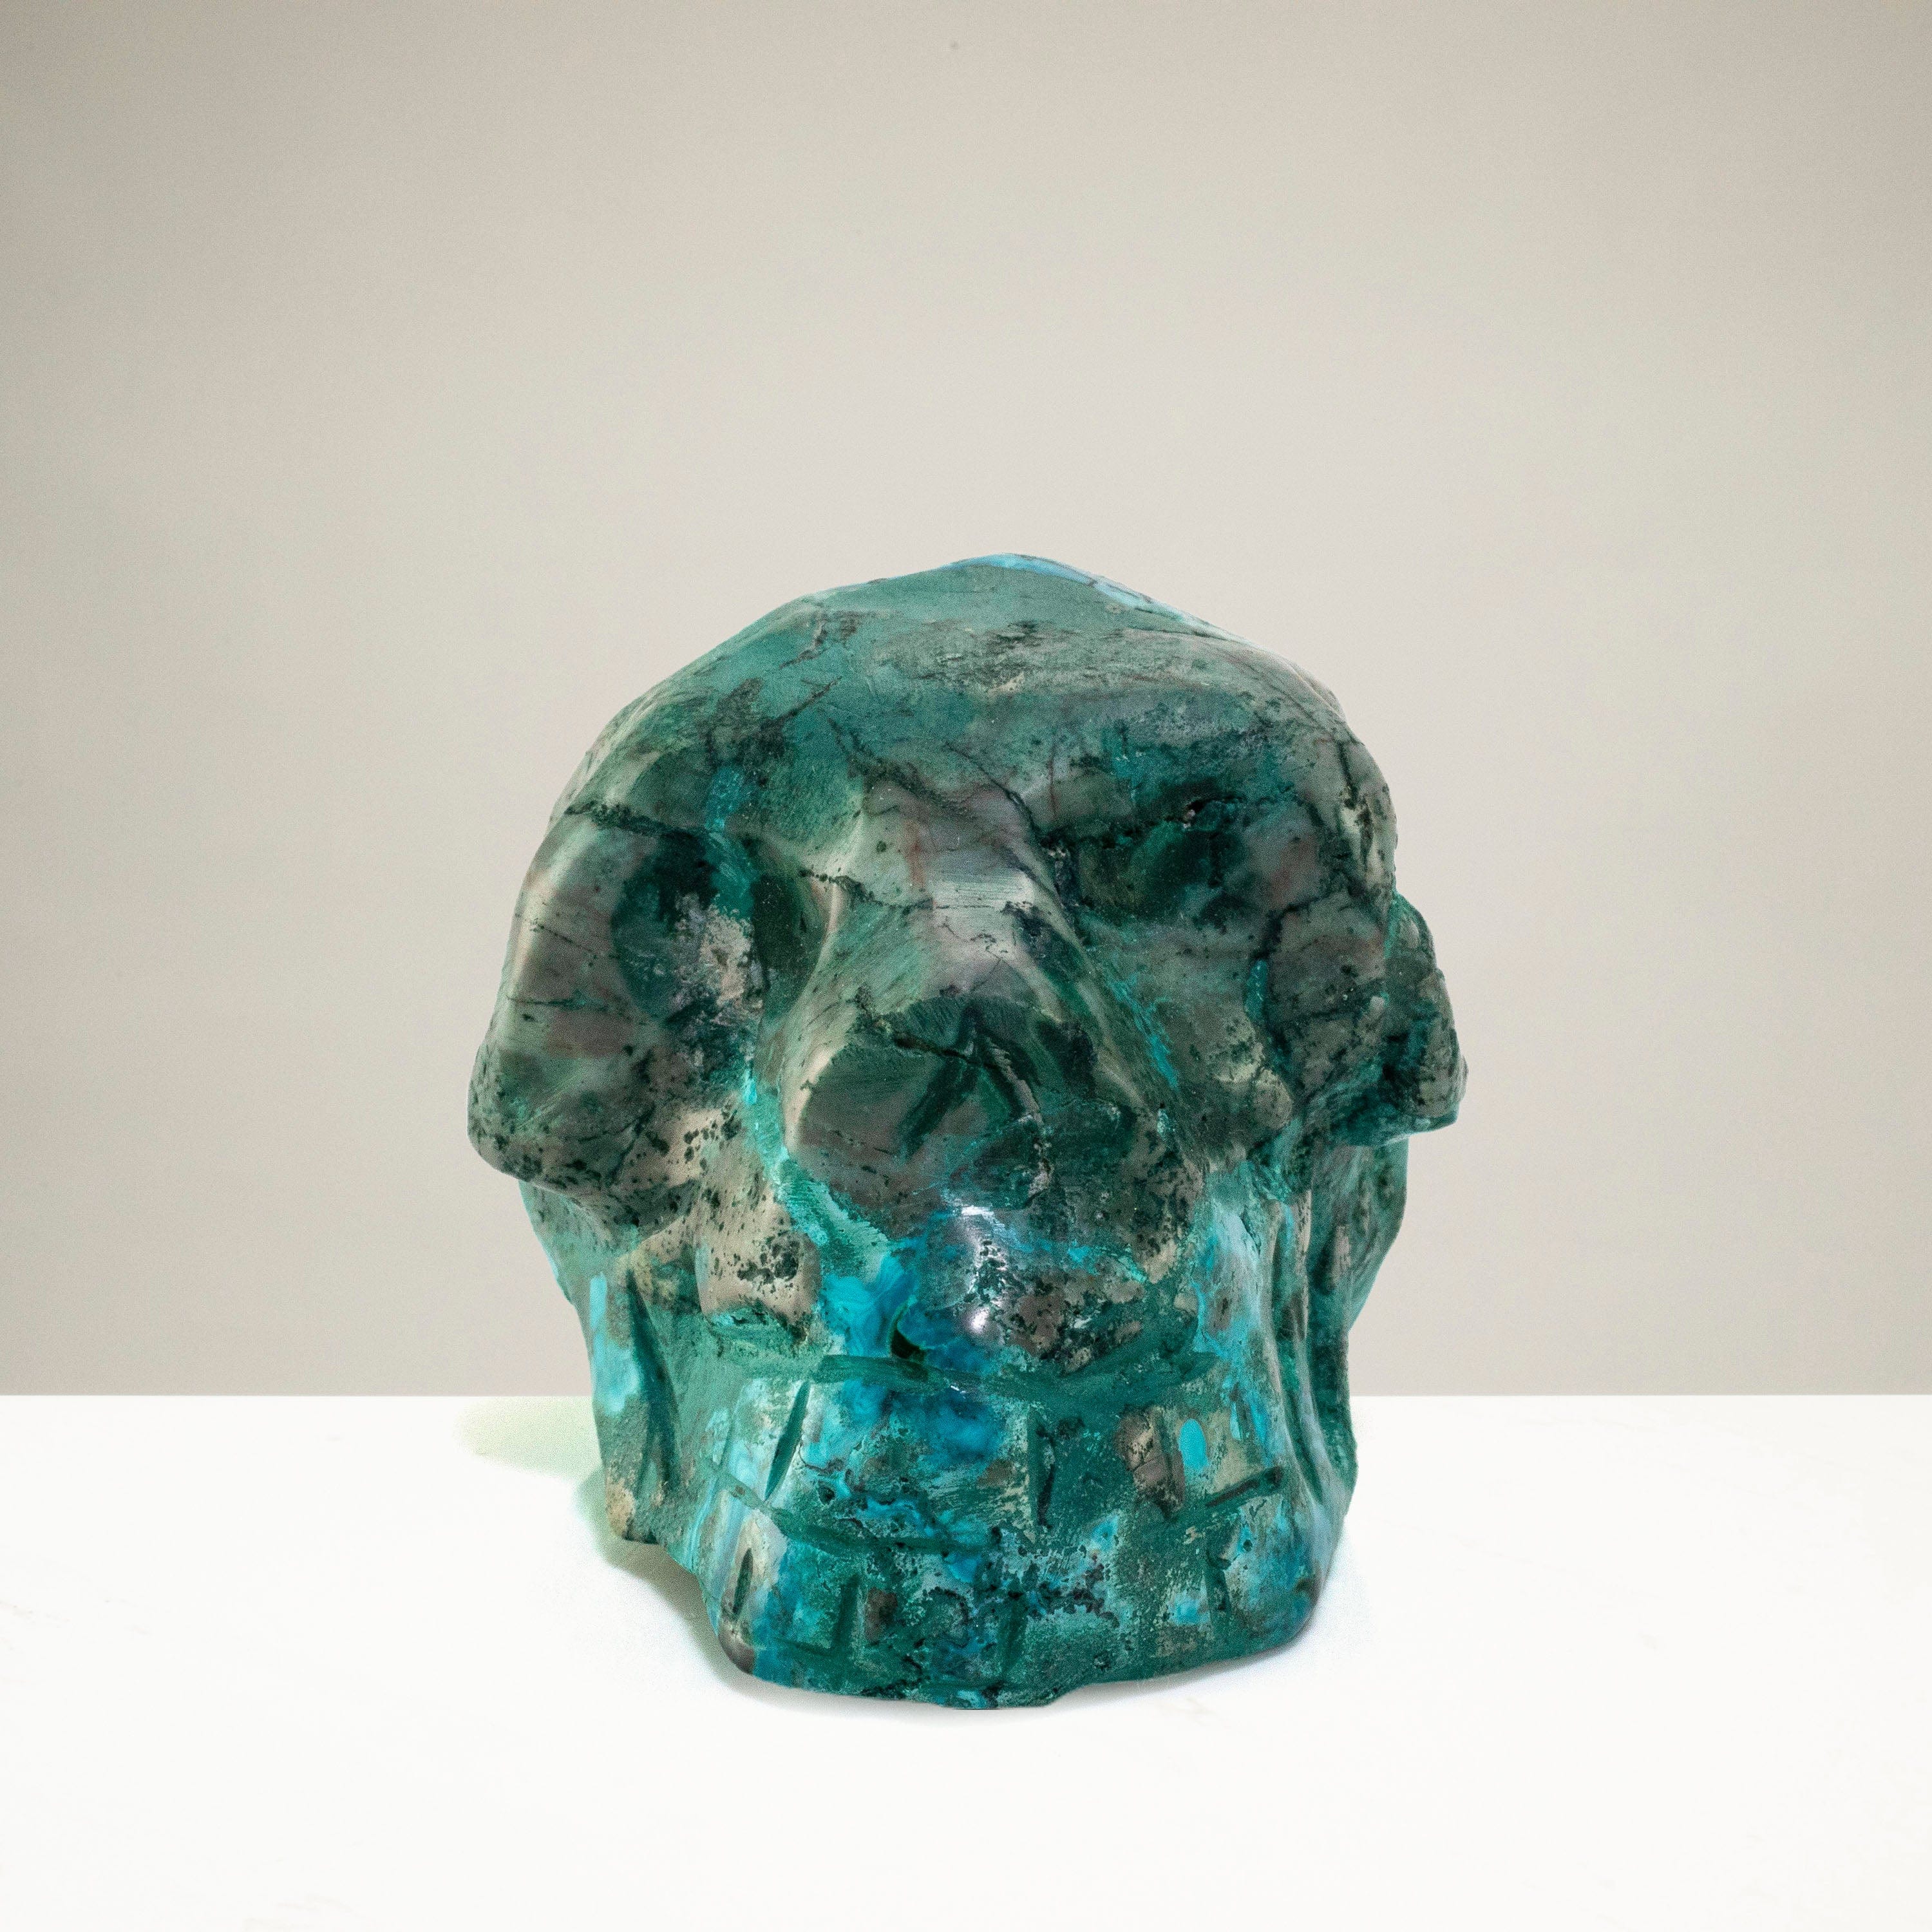 Kalifano Malachite Chrysocolla Skull Carving 3" / 180g SK800-CRY.001